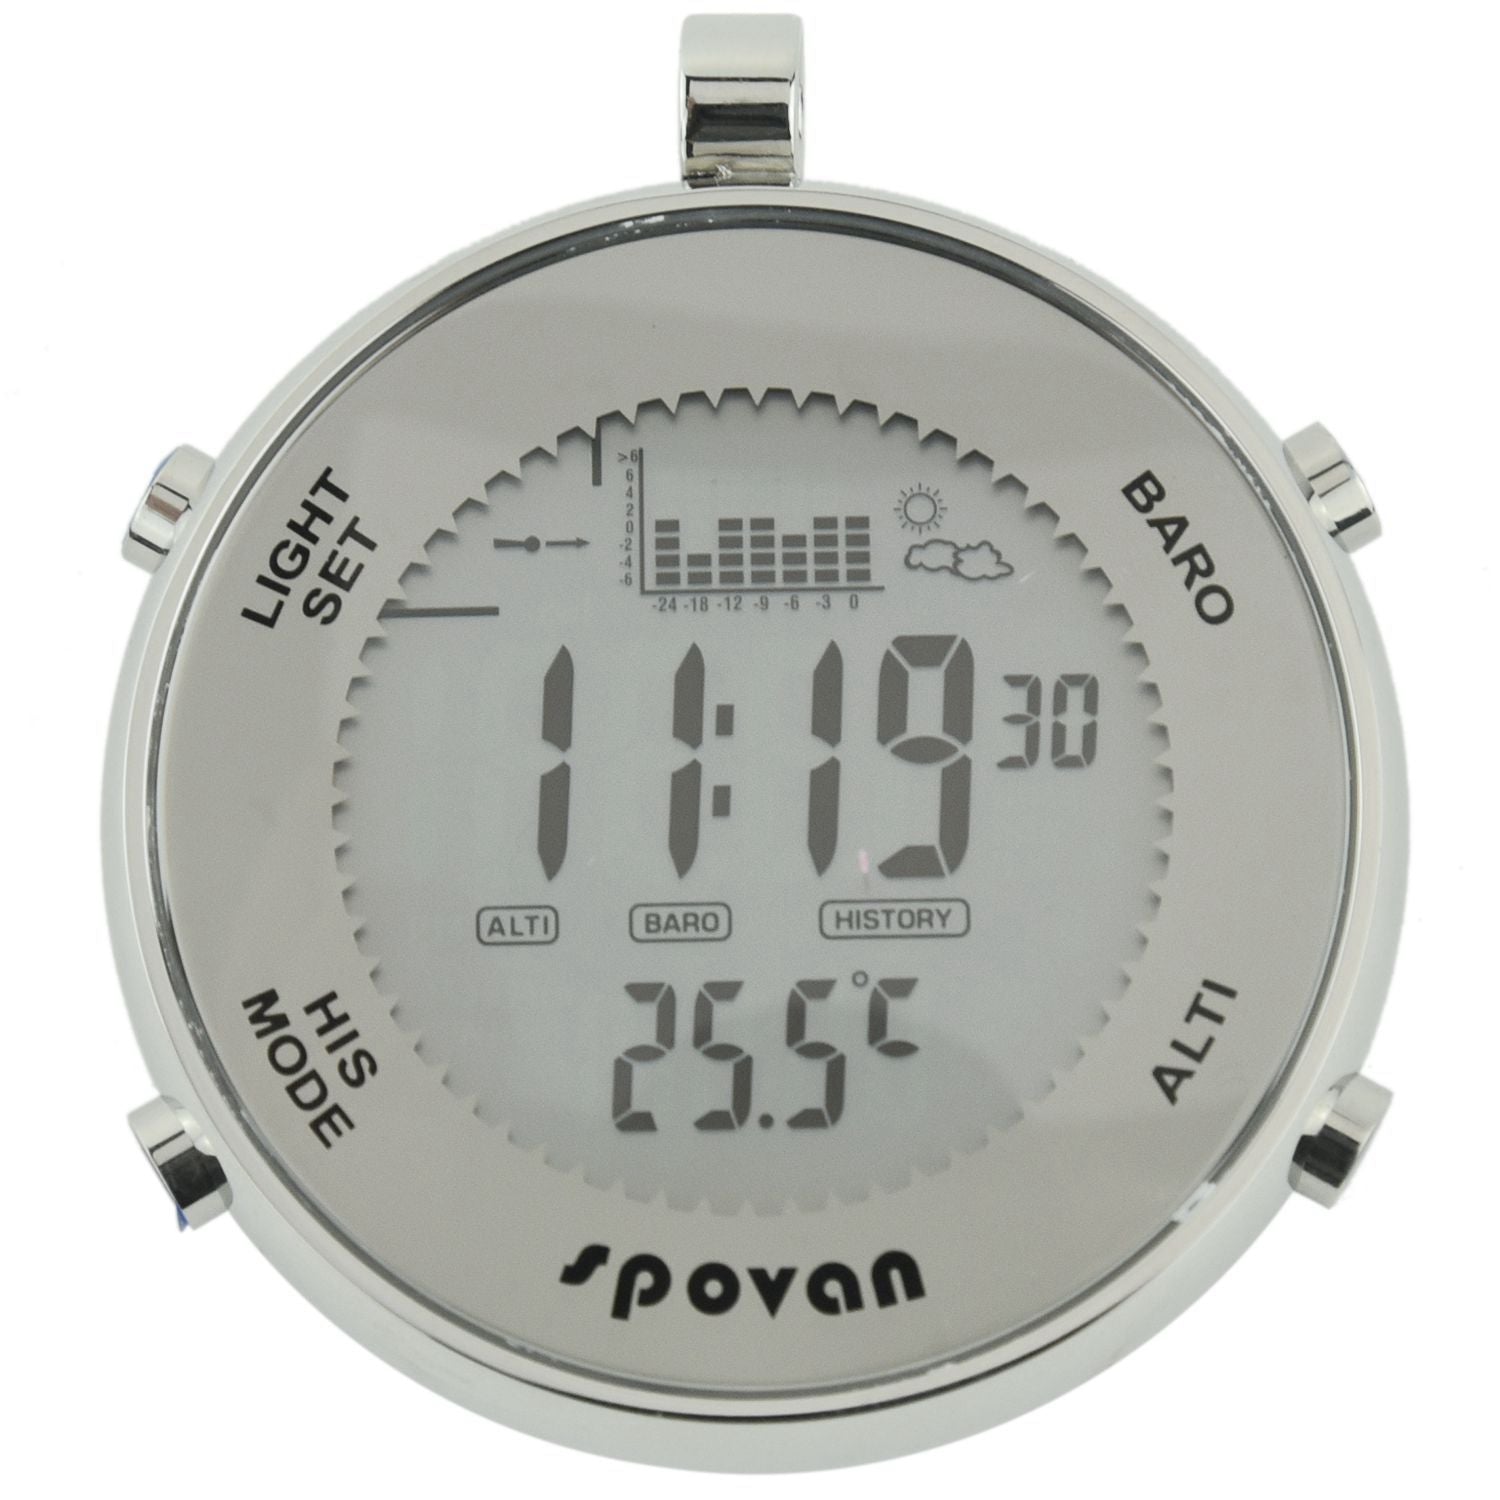 SPV600 Outdoor Waterproof Pocket Watch